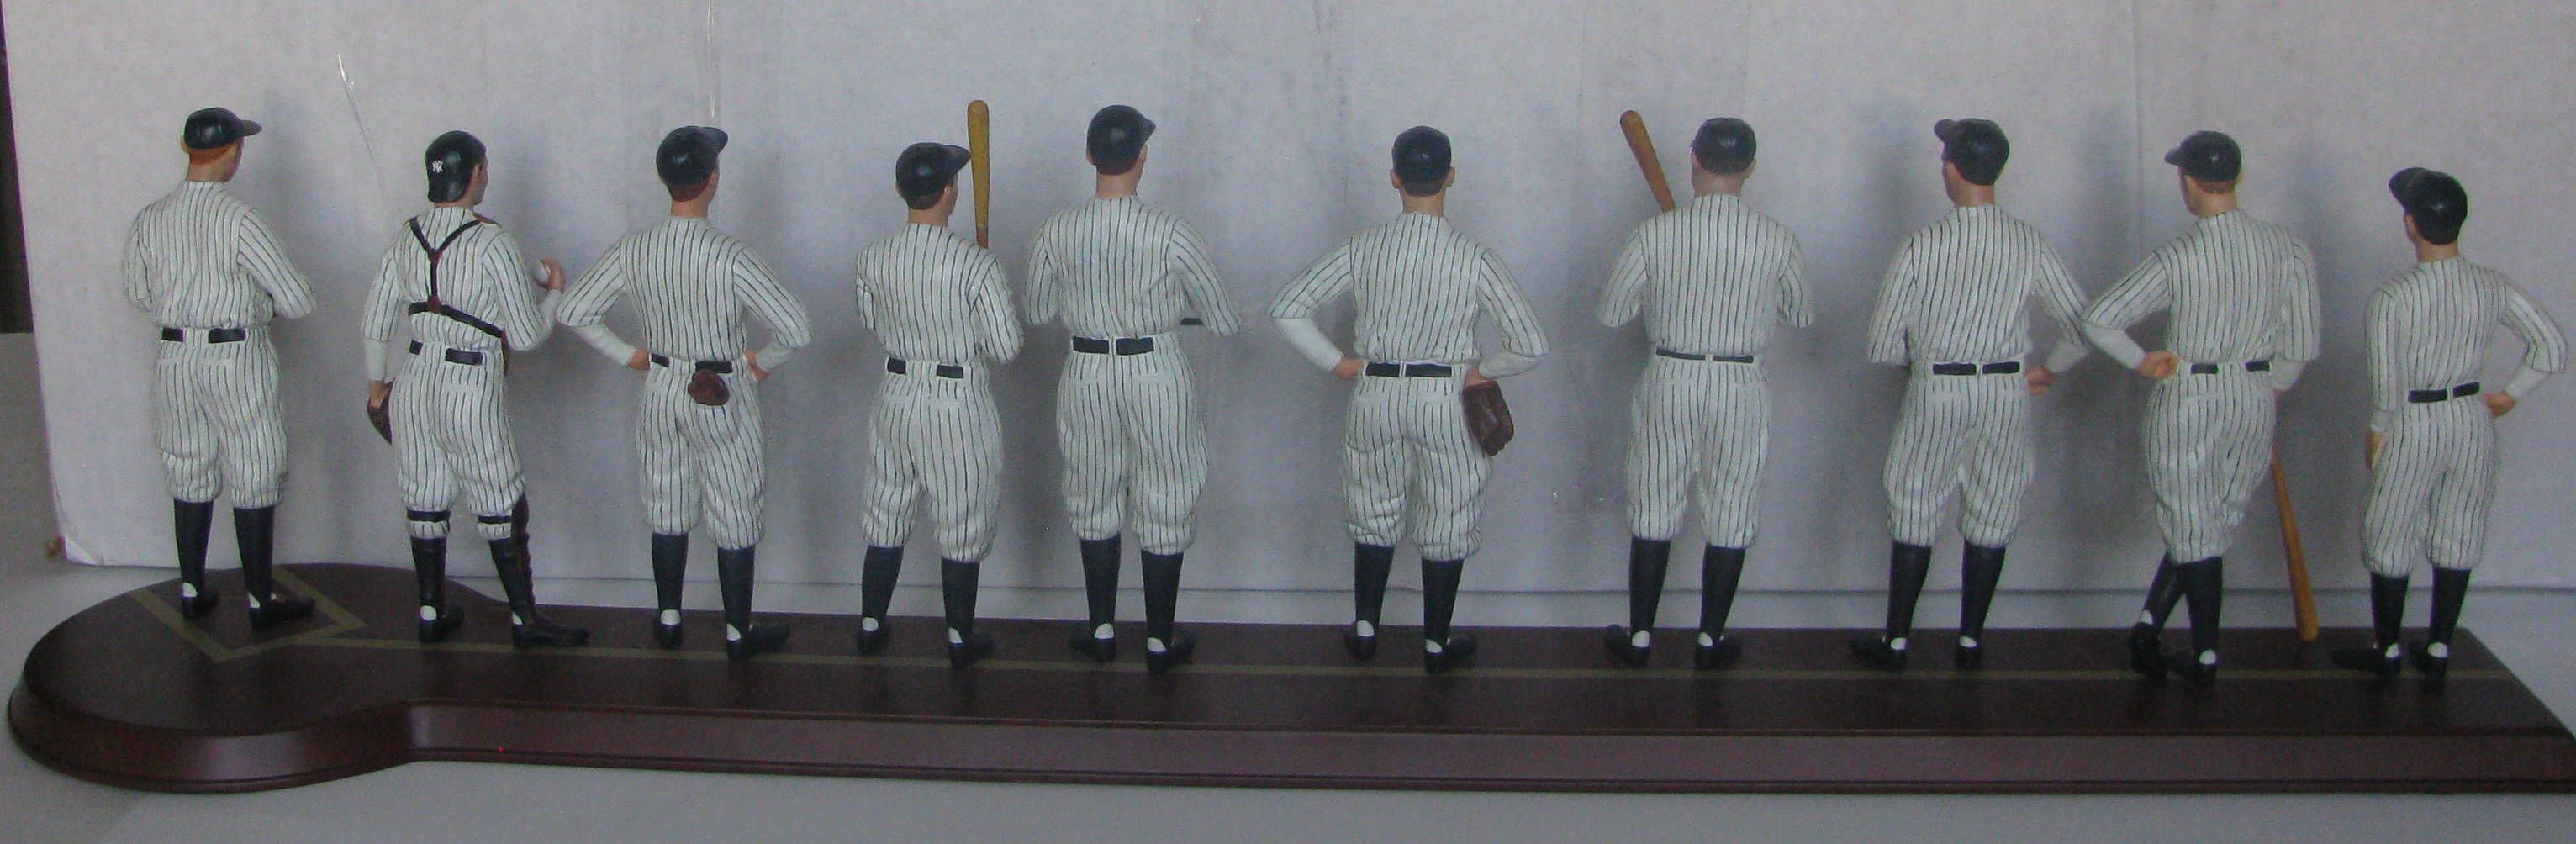 1927 Ny Yankees Danbury Mint Baseball Team Statue